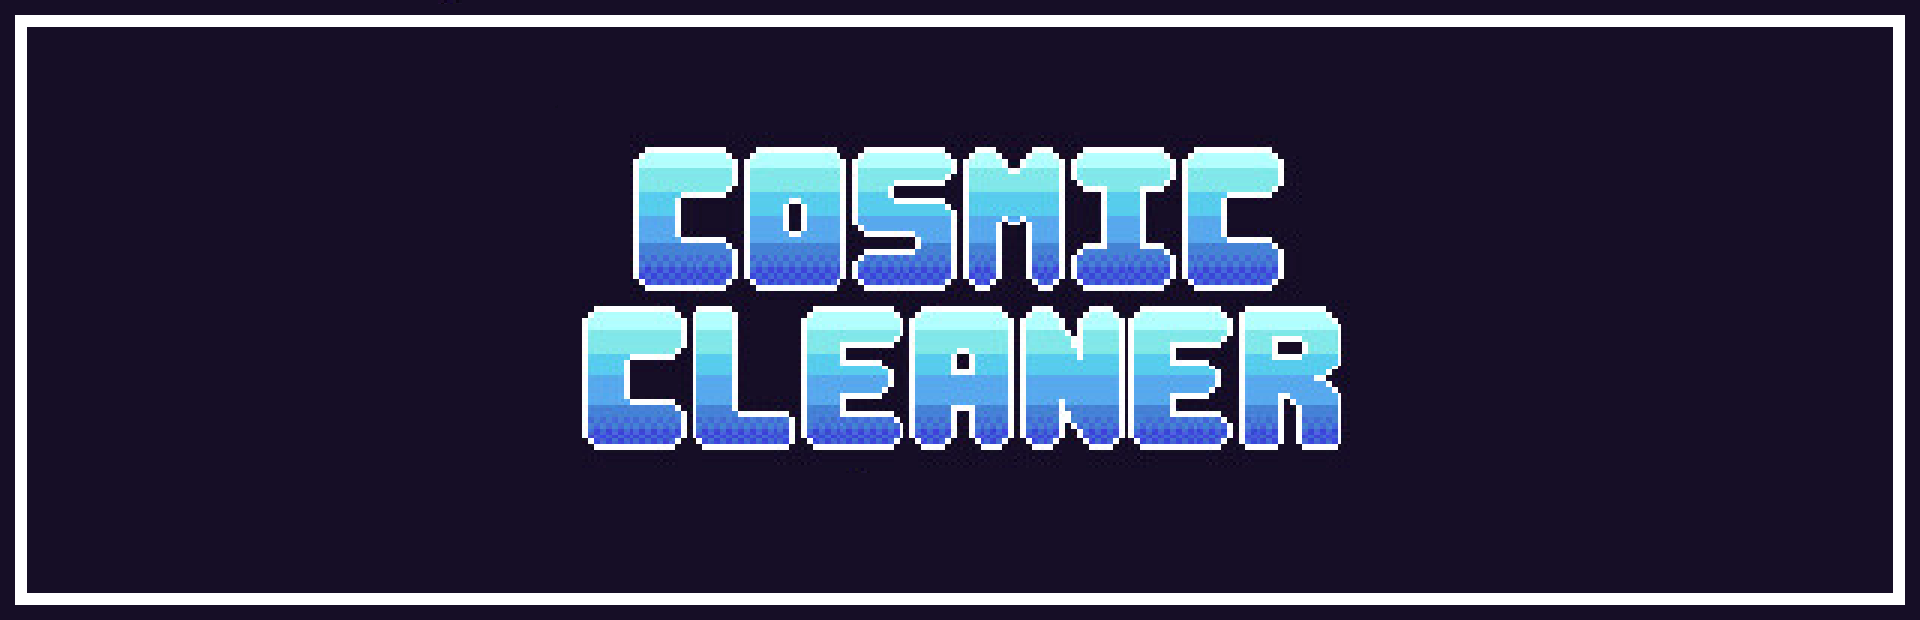 Cosmic Cleaner